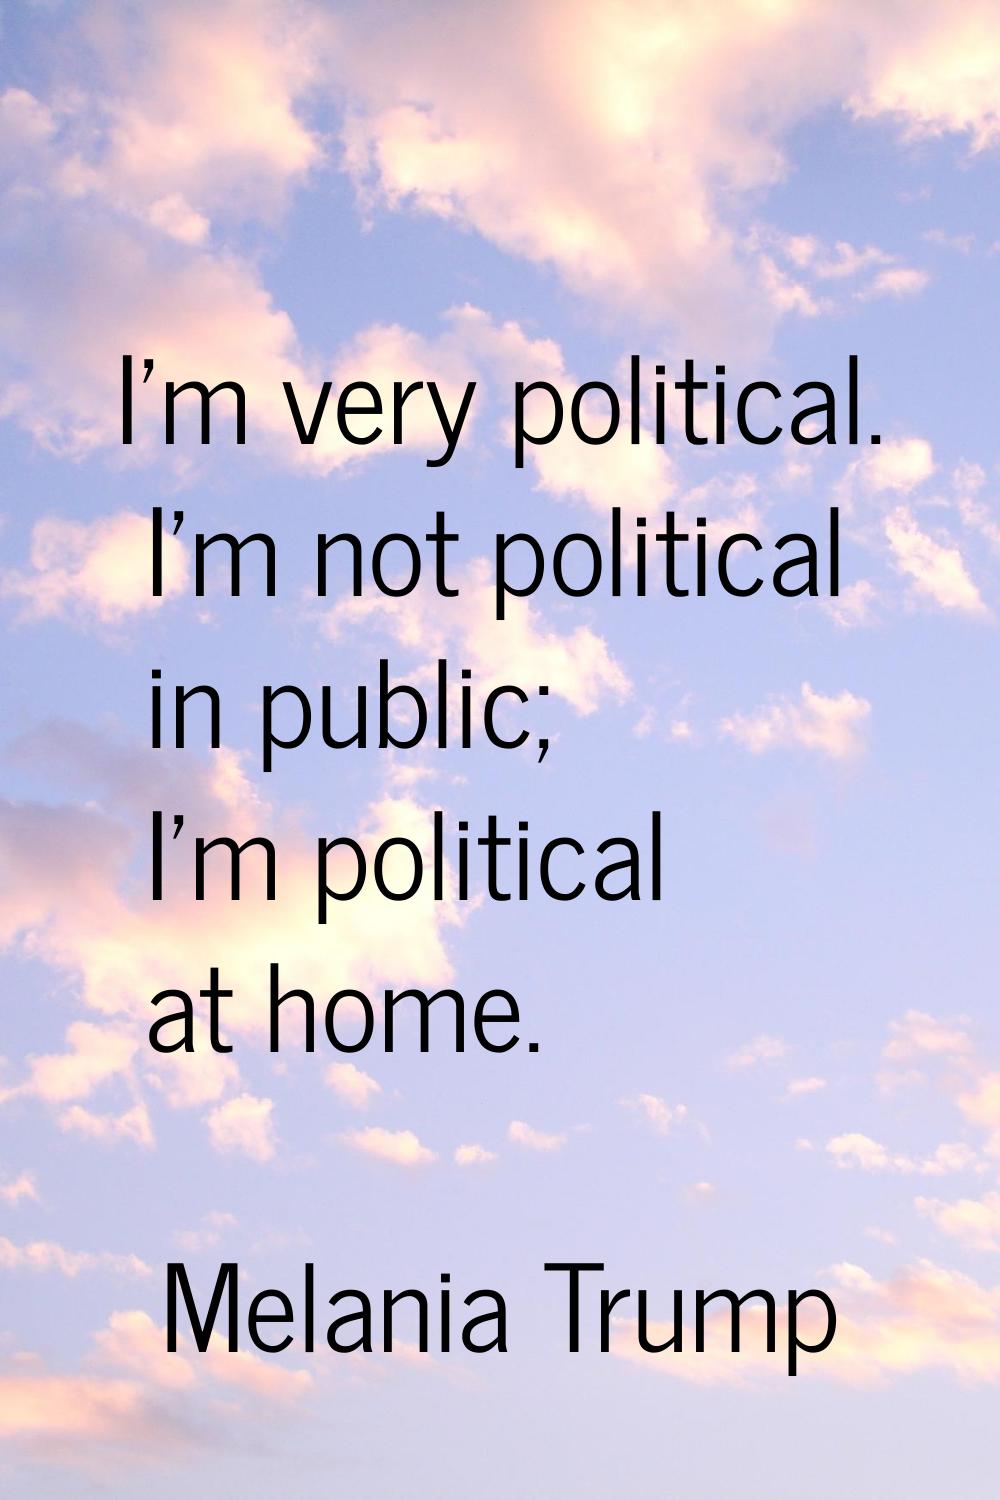 I'm very political. I'm not political in public; I'm political at home.